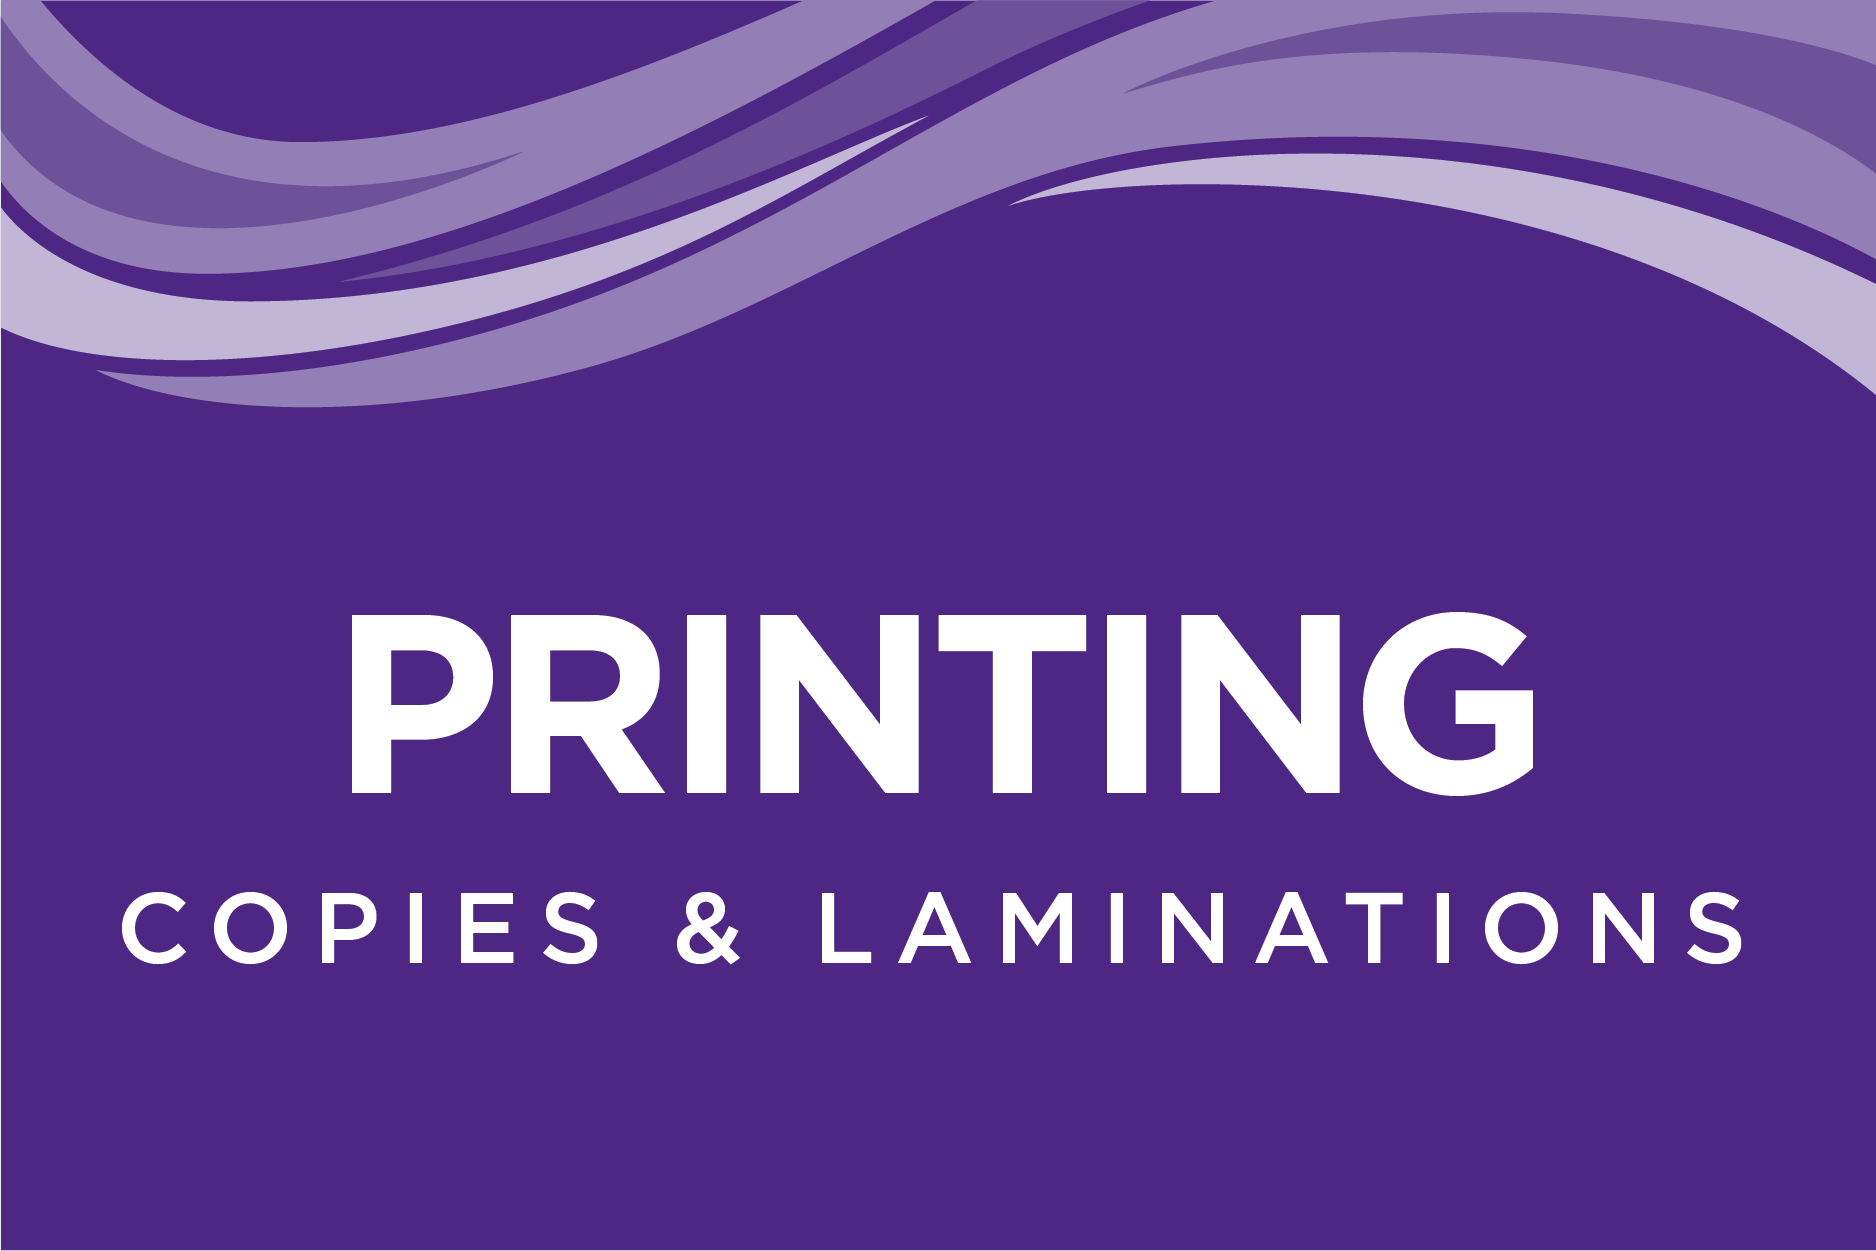 Resume printing, copies, and Laminations